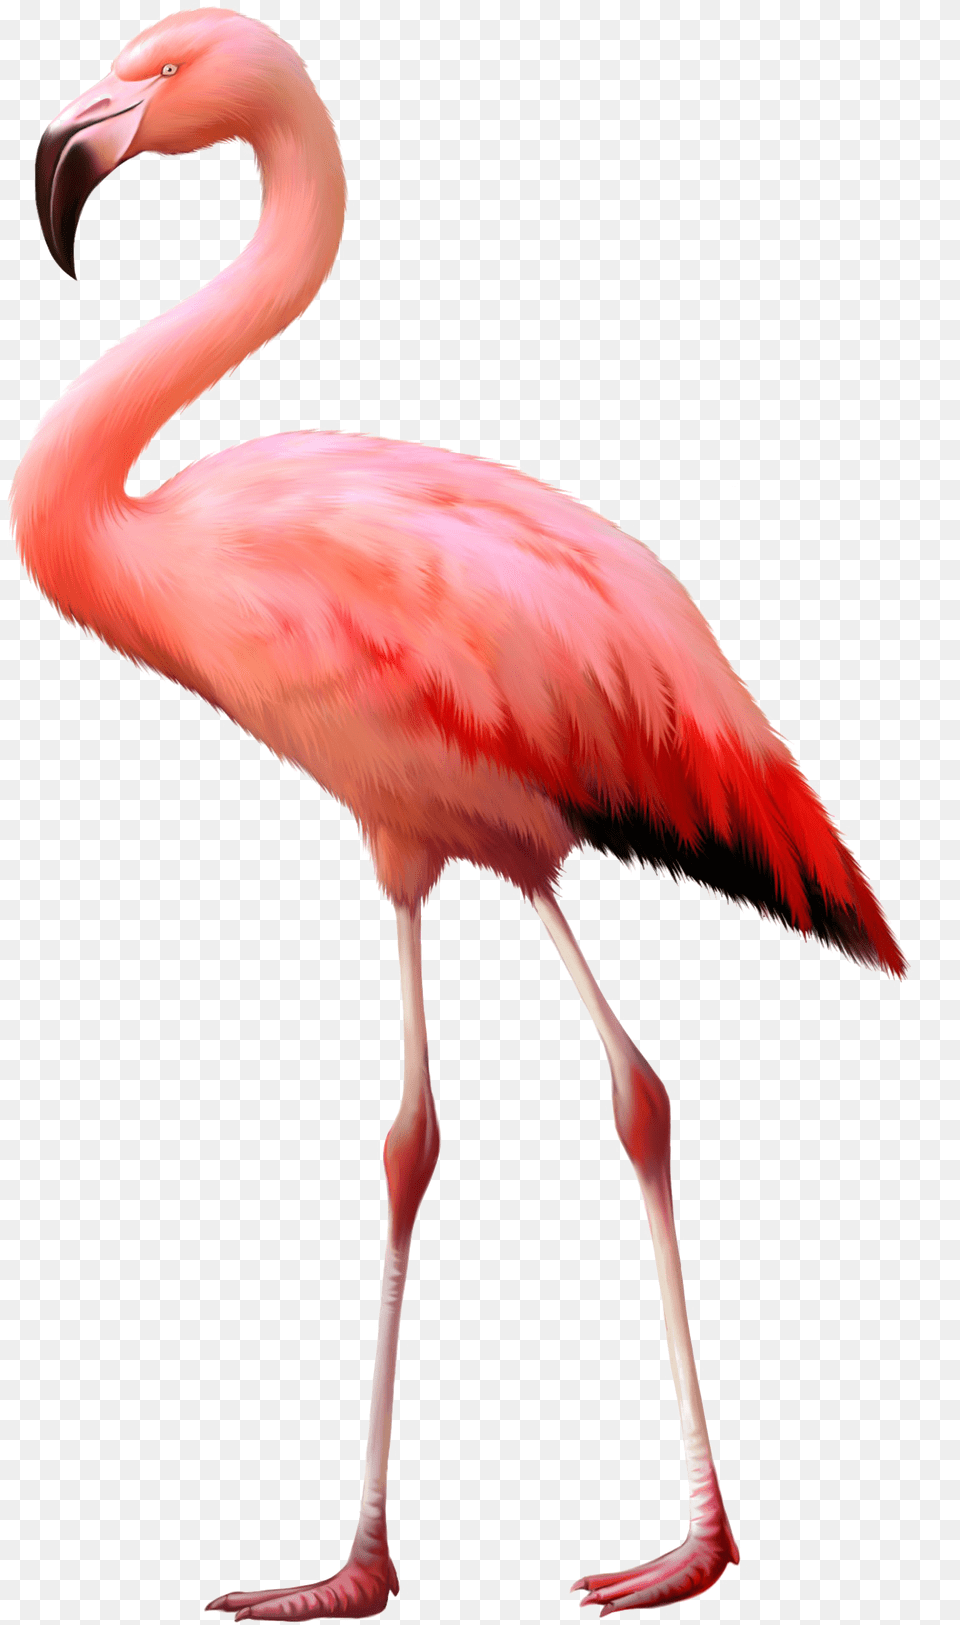 Download Flamingo Background Image Background Flamingo, Animal, Bird Png